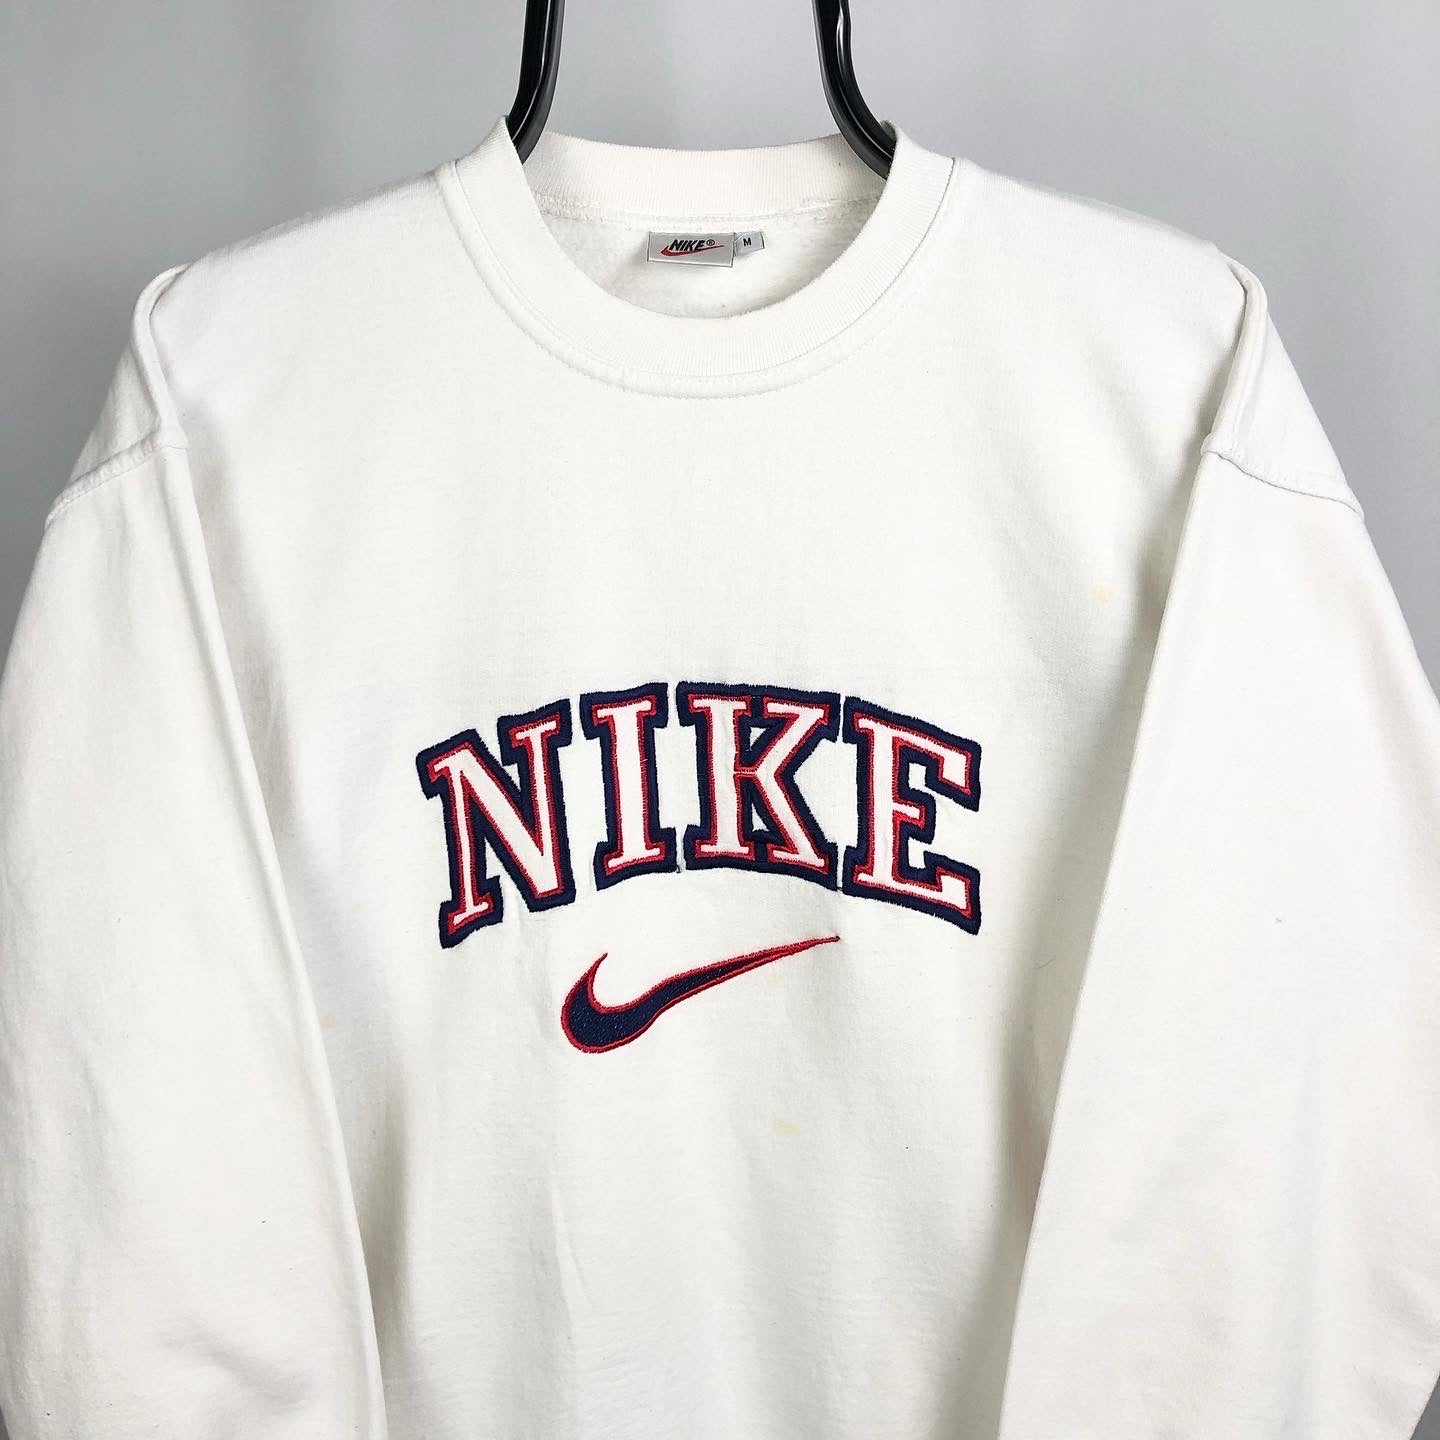 90s vintage nike spellout sweatshirt